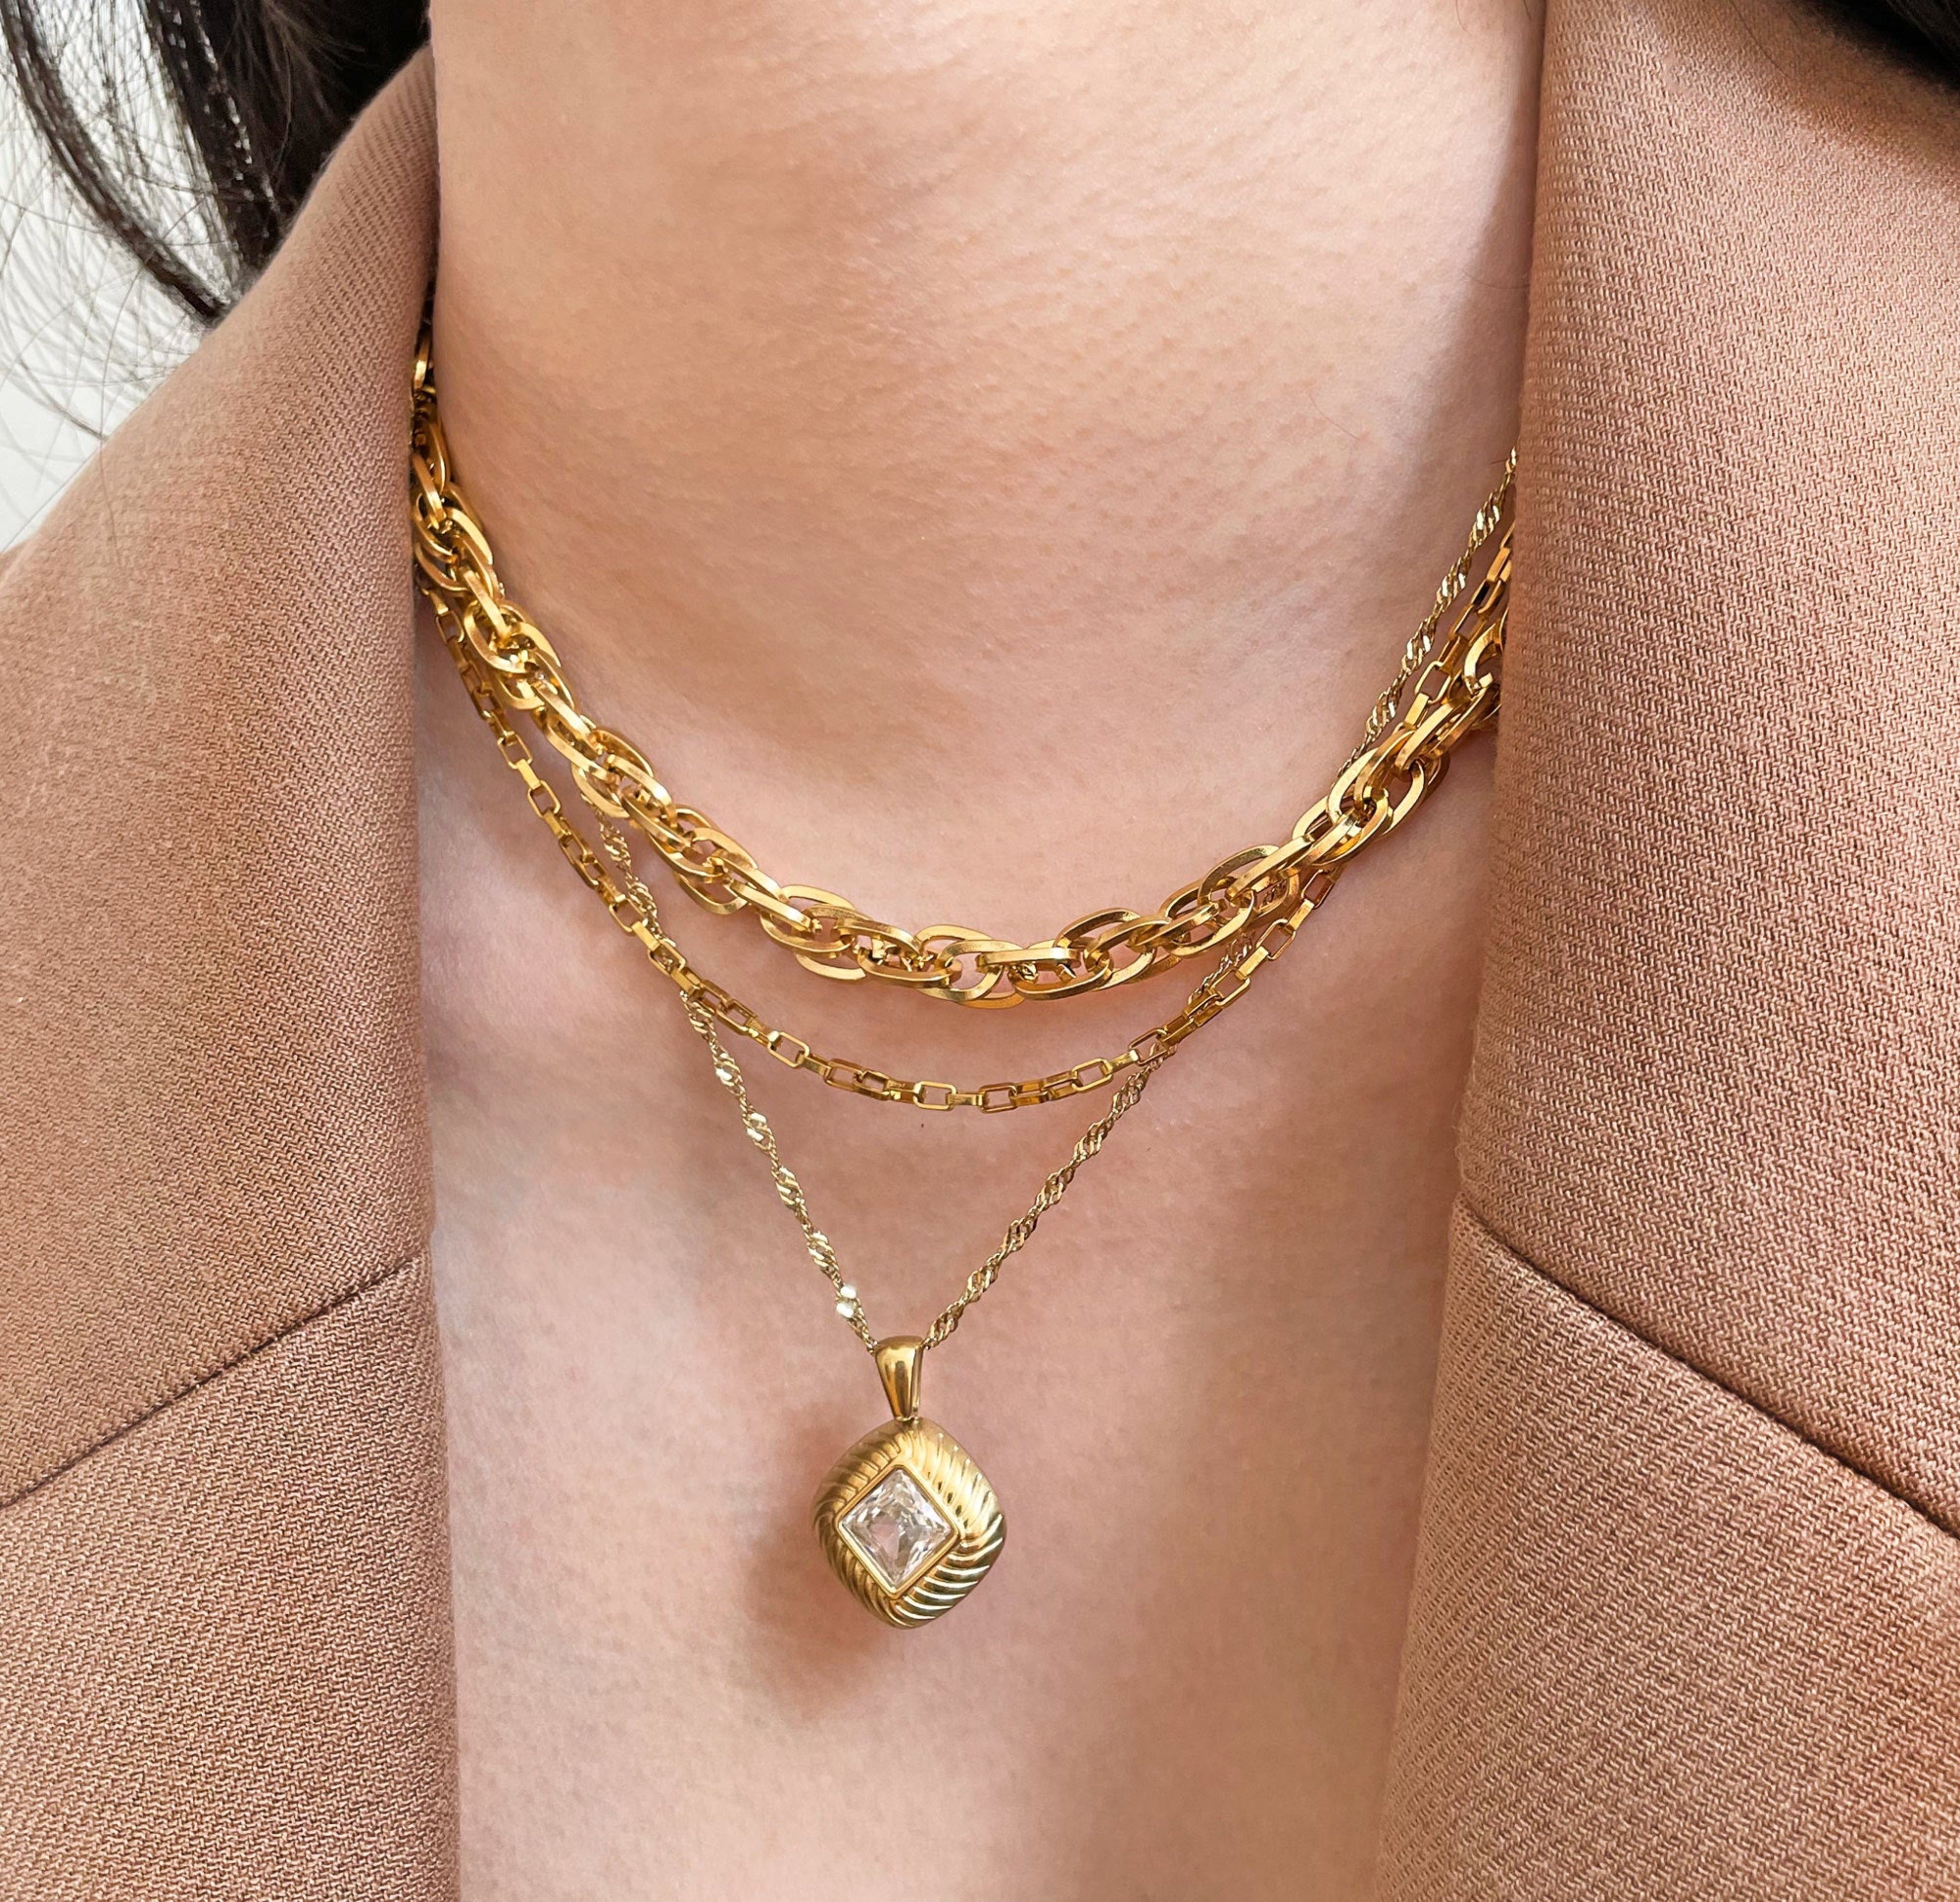 gold vintage pendant necklace waterproof jewelry